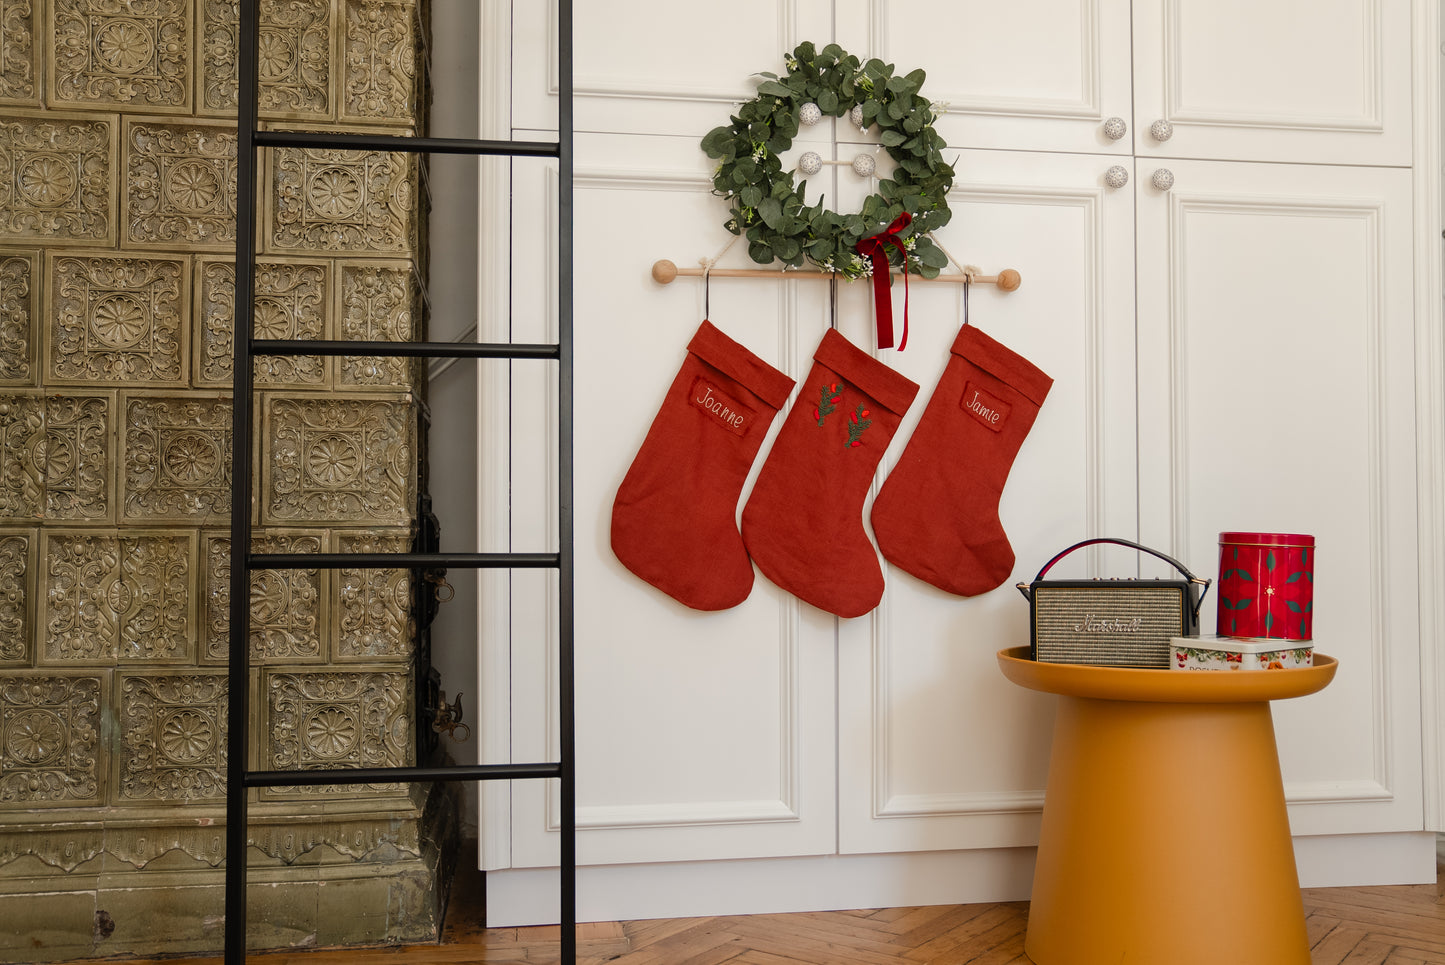 Set of 3 stockings "Merry Christmas"